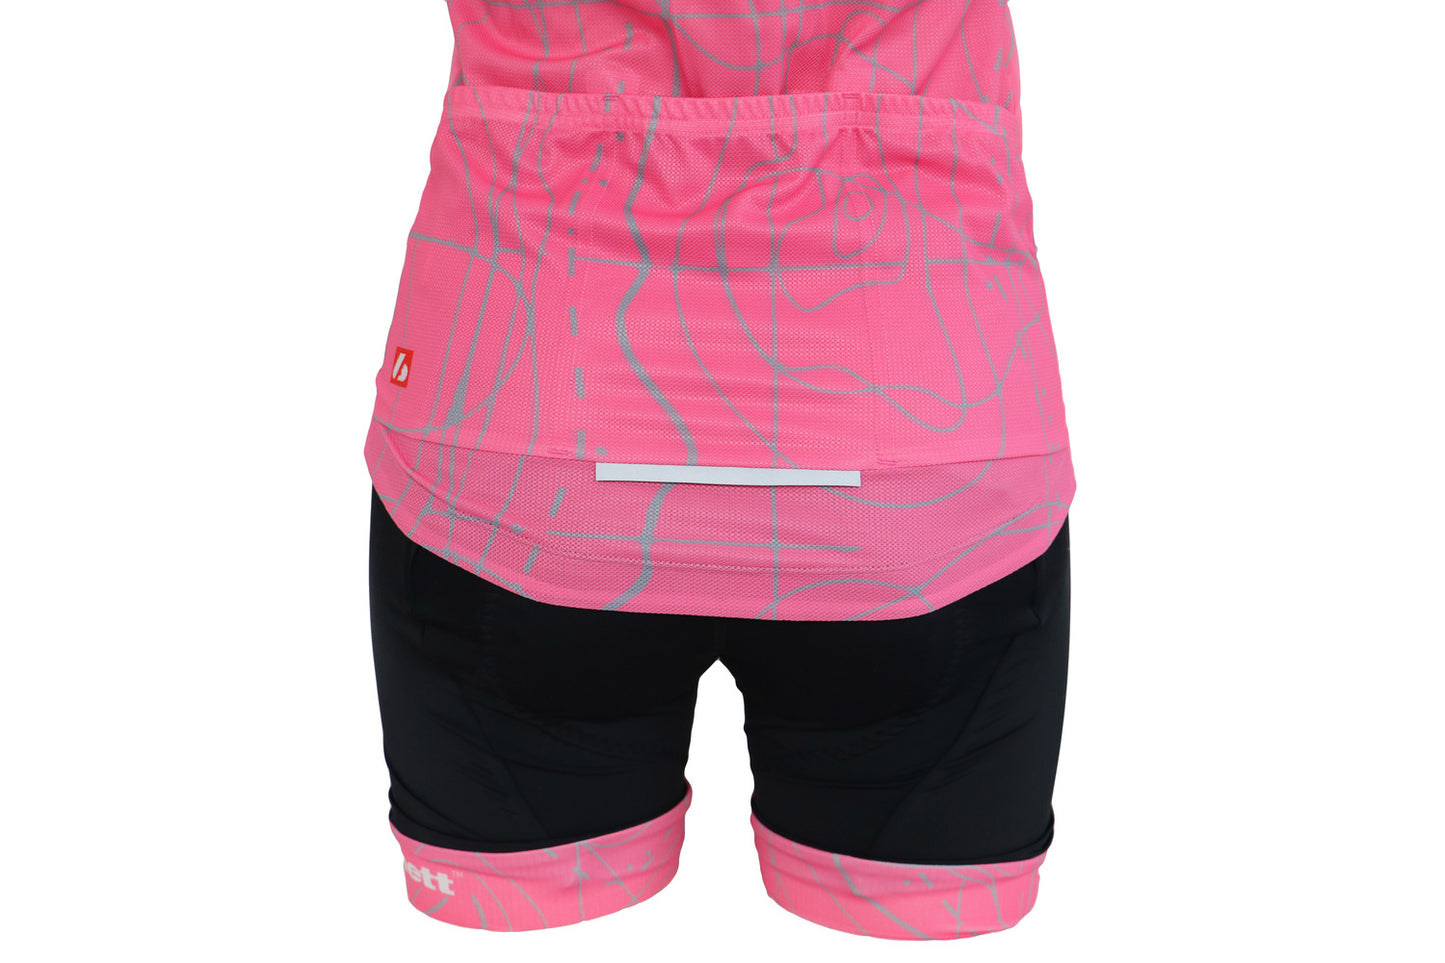 Bike textile - long-sleeved jacket, pink, windbreaker